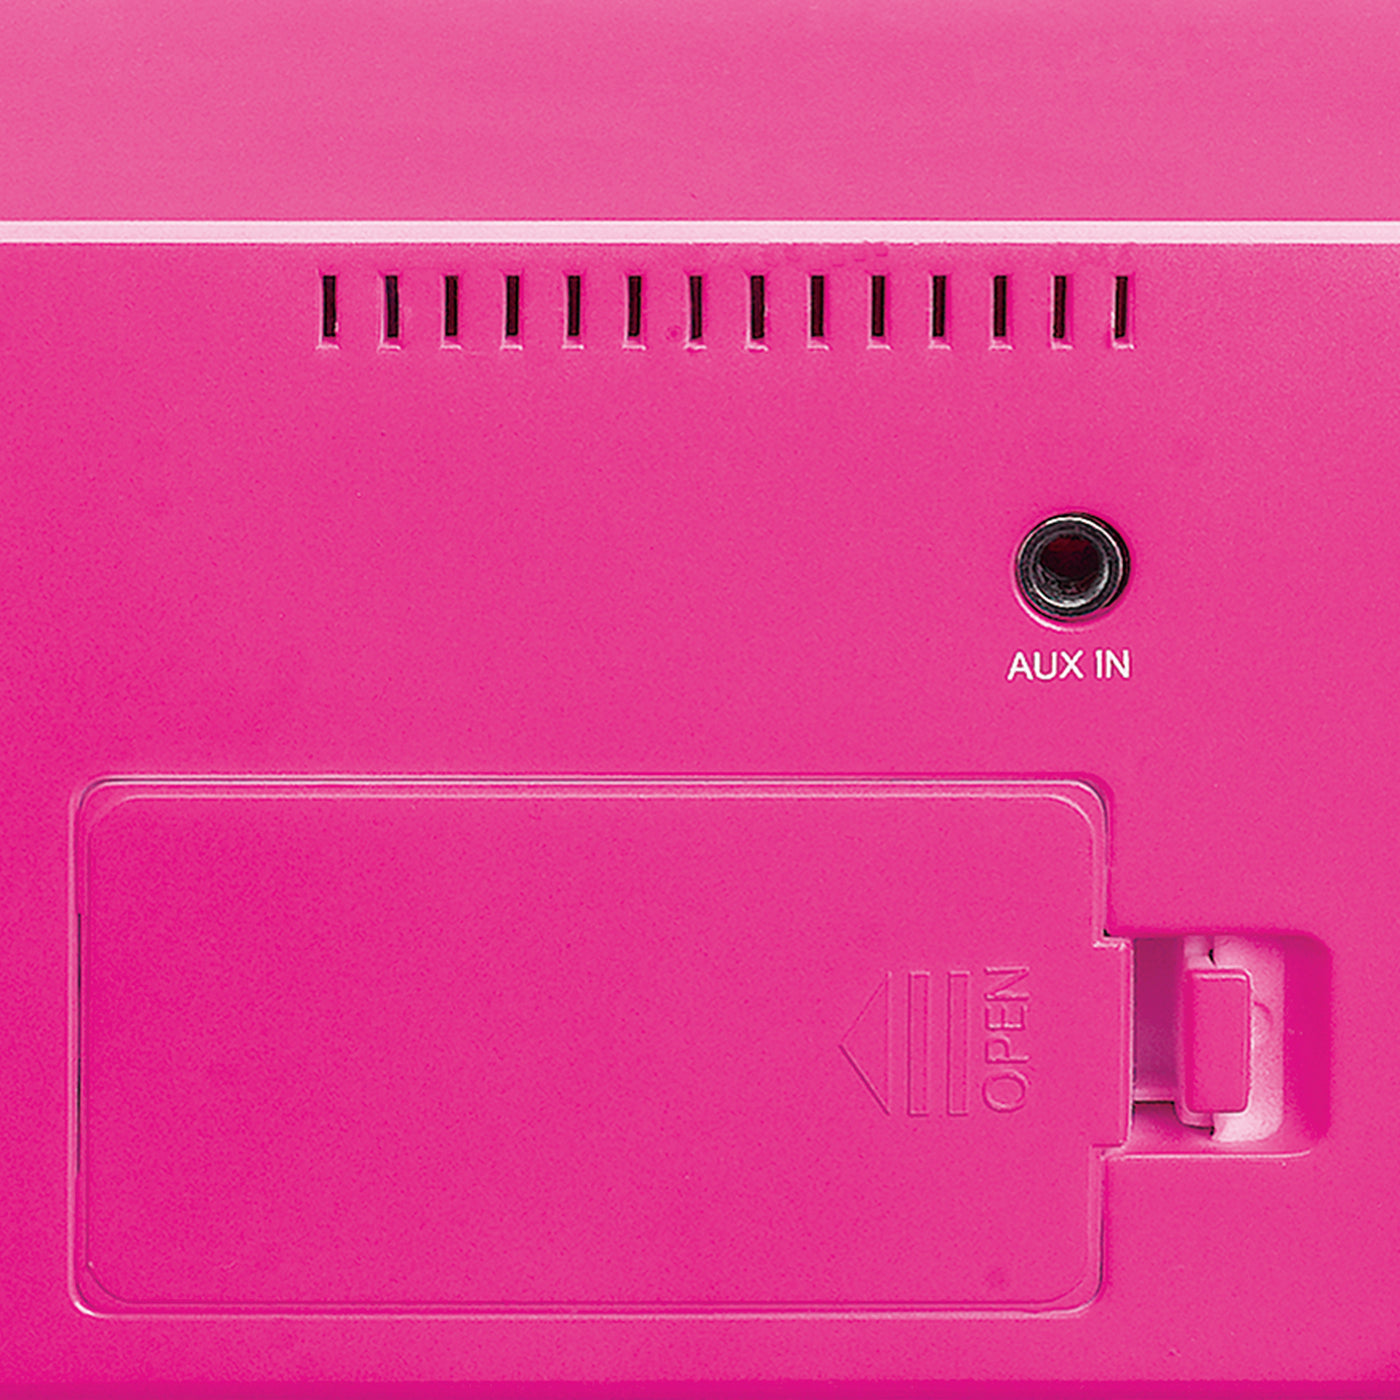 Lenco CR-510PK - Stereo FM-Radiowecker mit 0,9" LED-Display - Pink